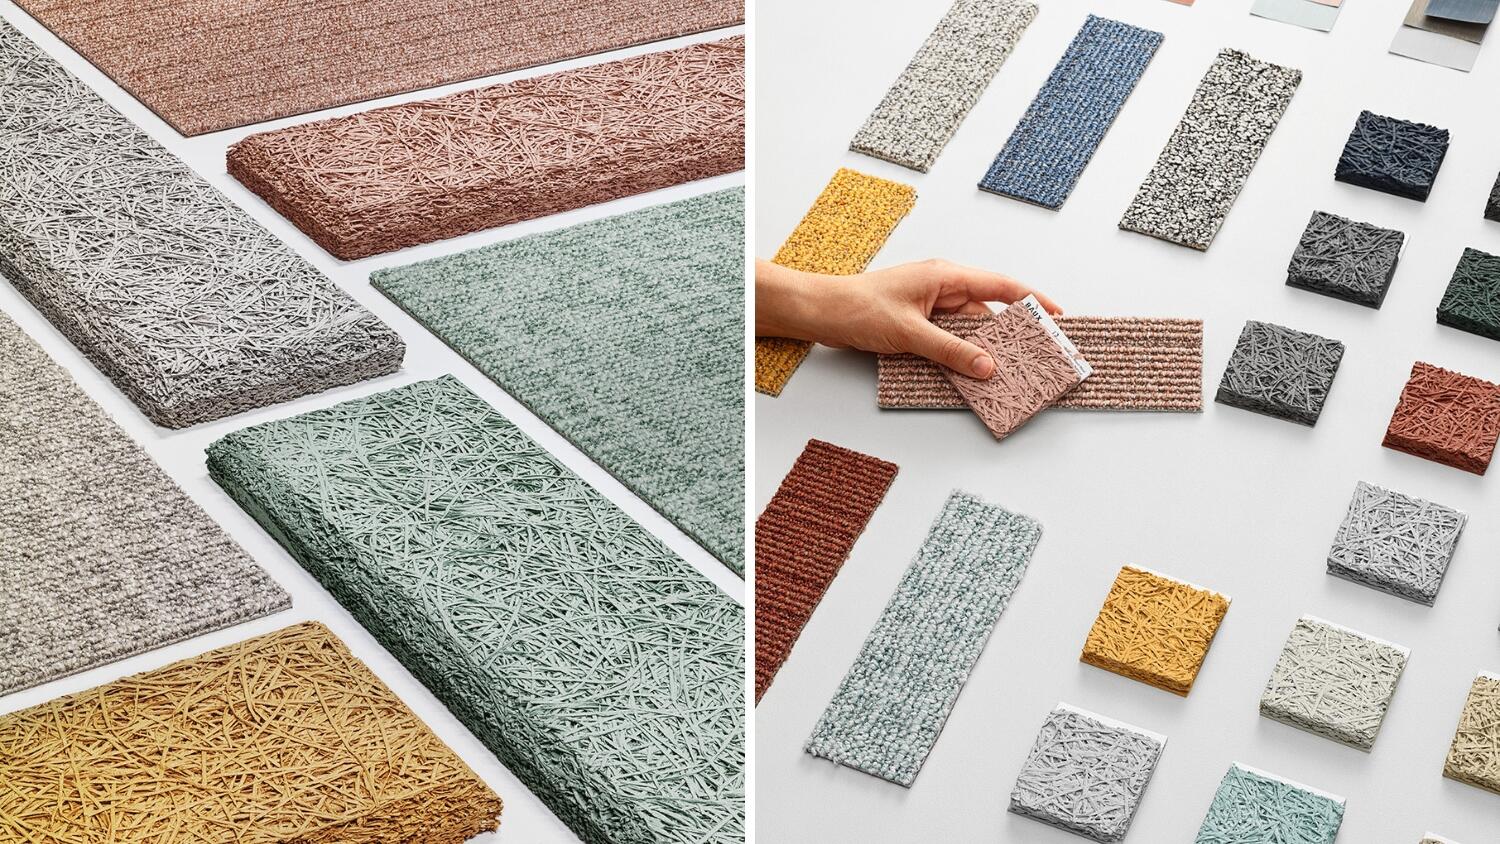 Behind the scenes process of DESSO carpet tiles and BAUX acoustic panels matching colour palette